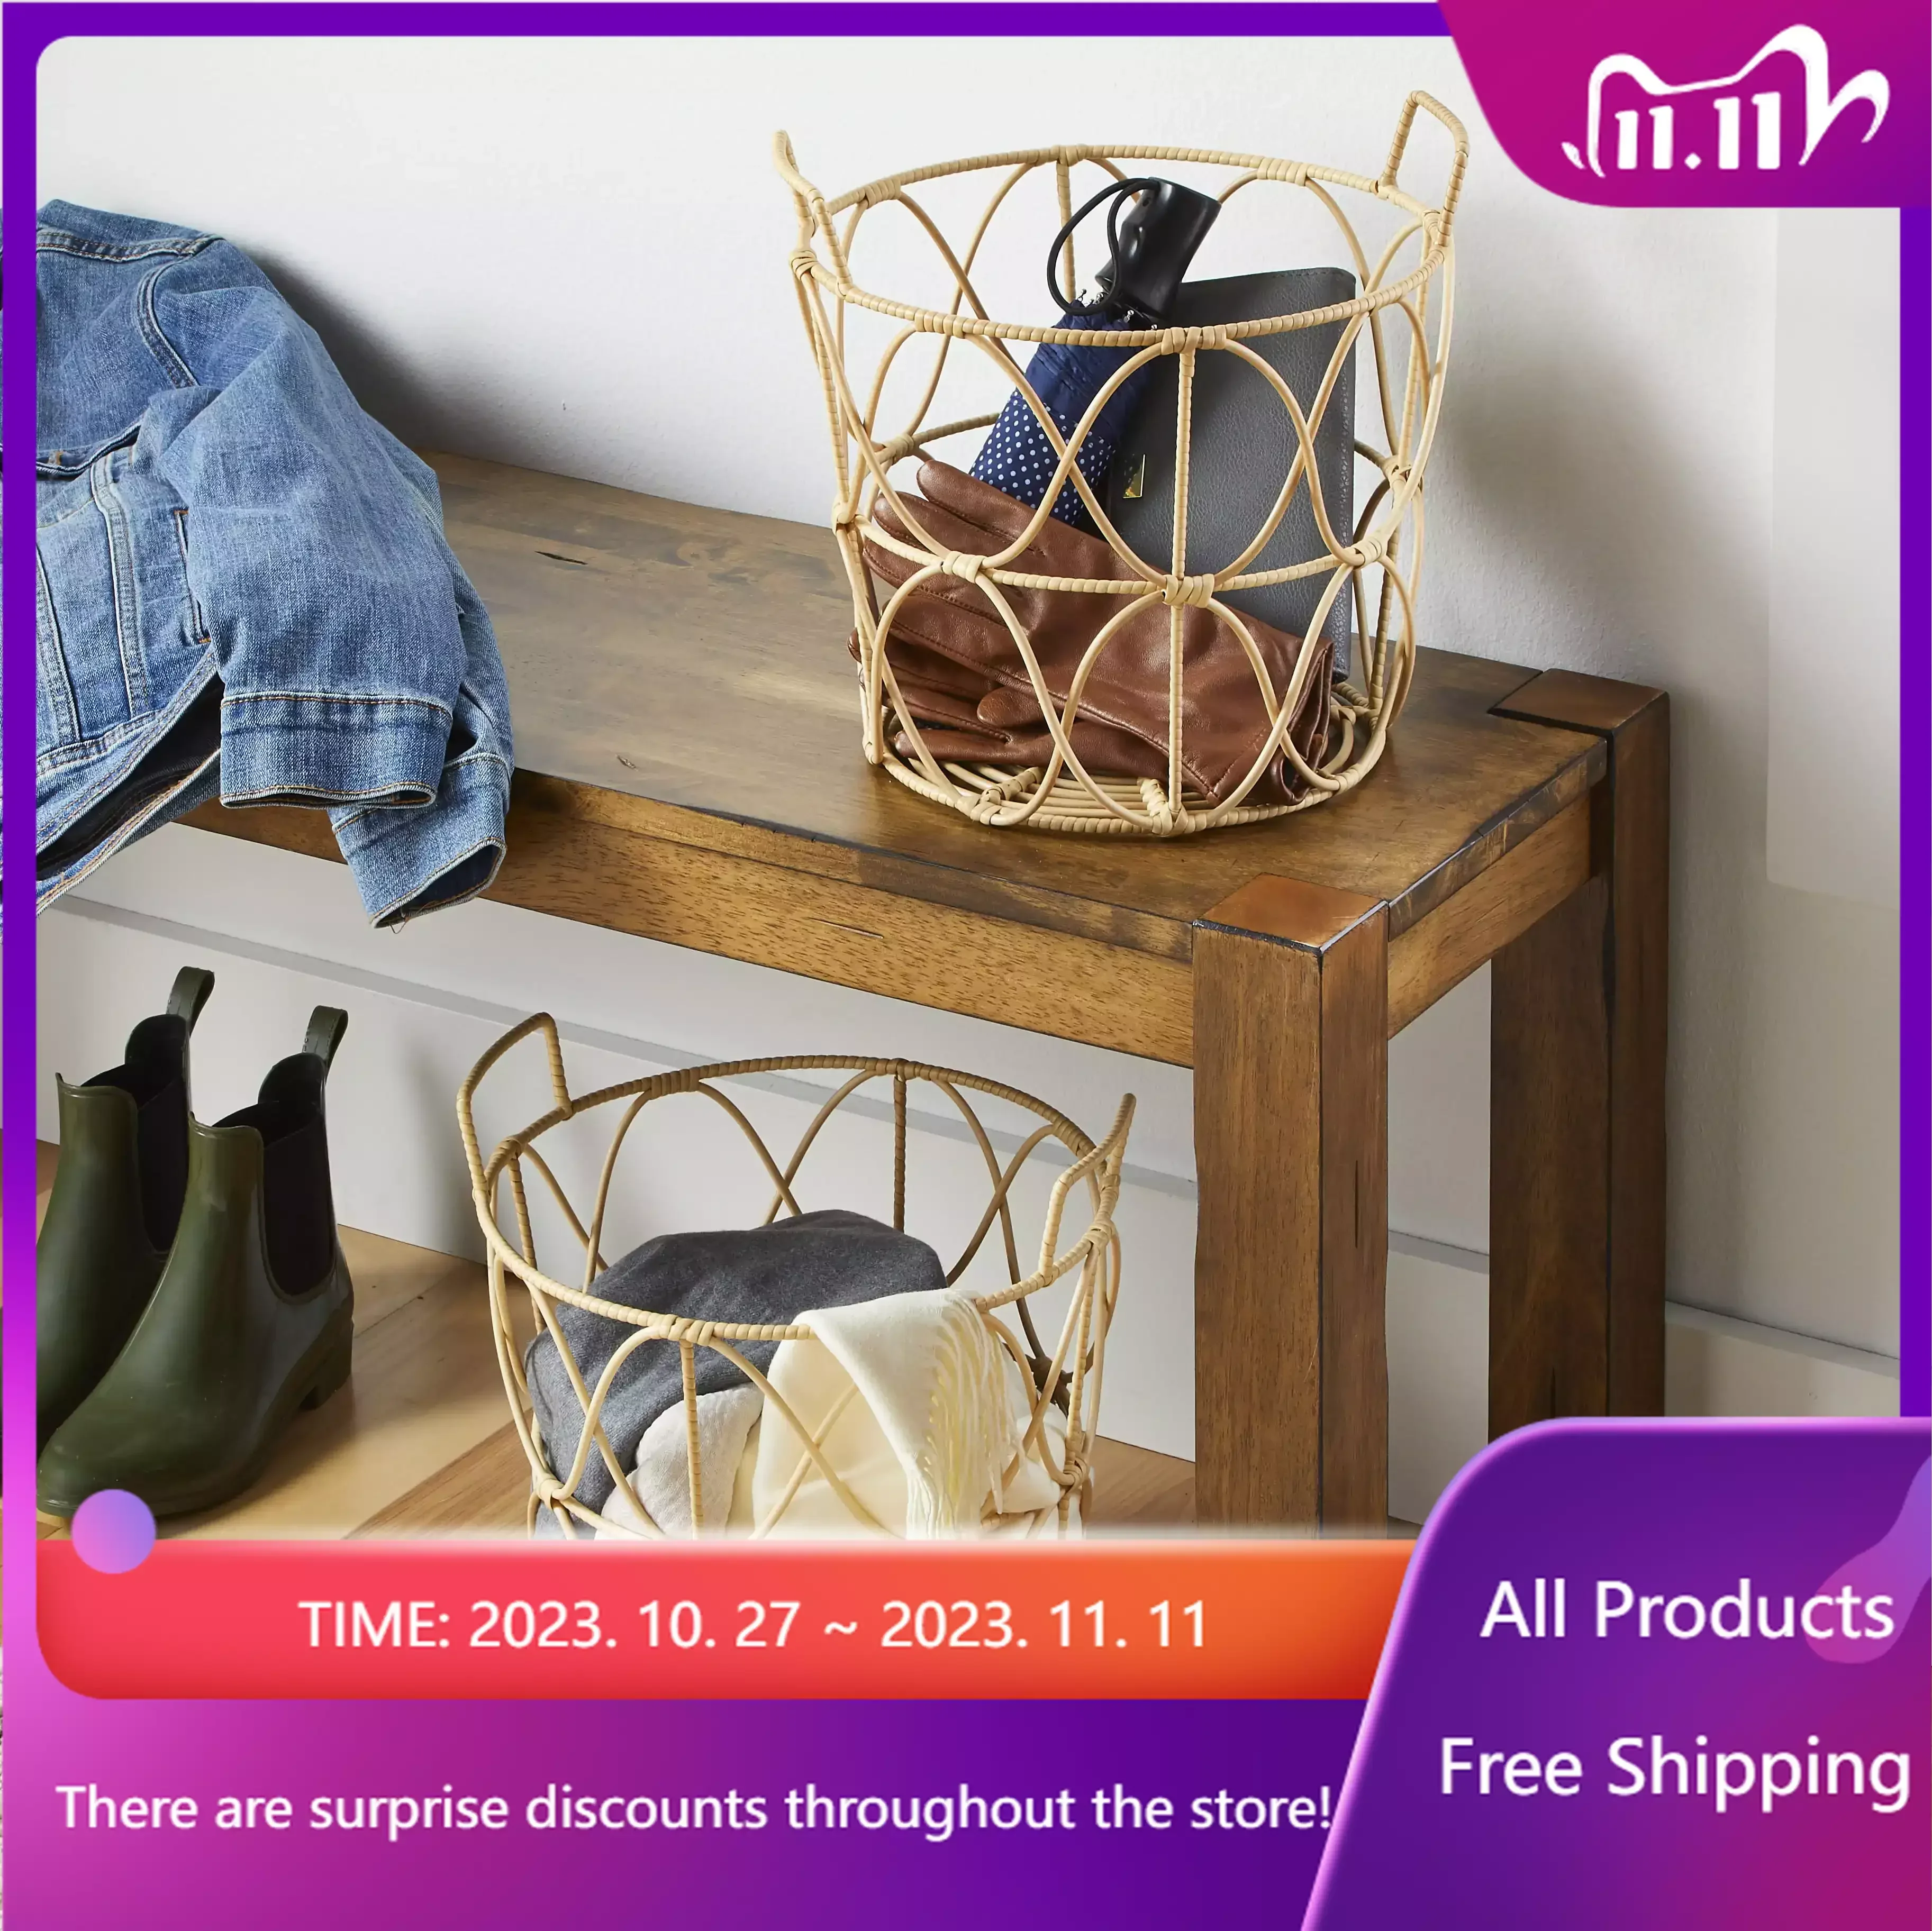 

Poly Rattan Storage Basket Set with Handles, 2-Piece， woven basket storage baskets Sales promotion Sales promotion